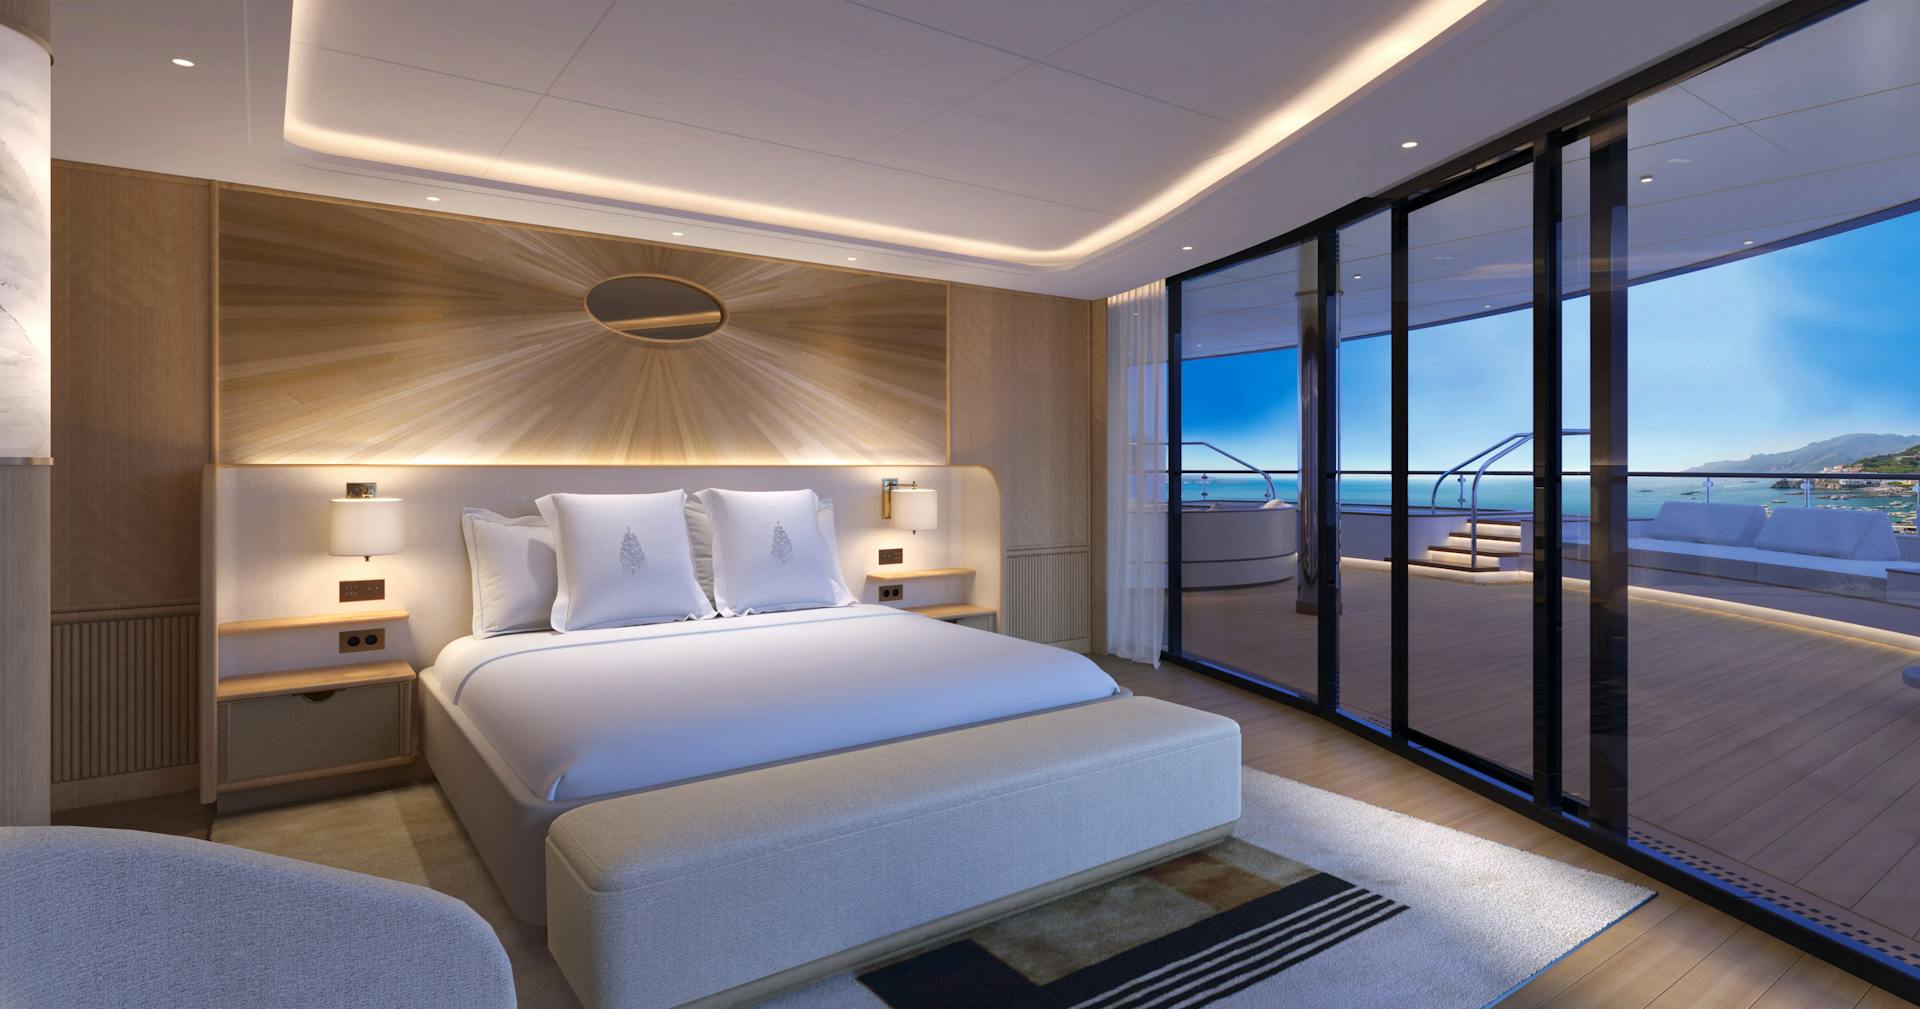 Saint-Tropez Suite bedroom